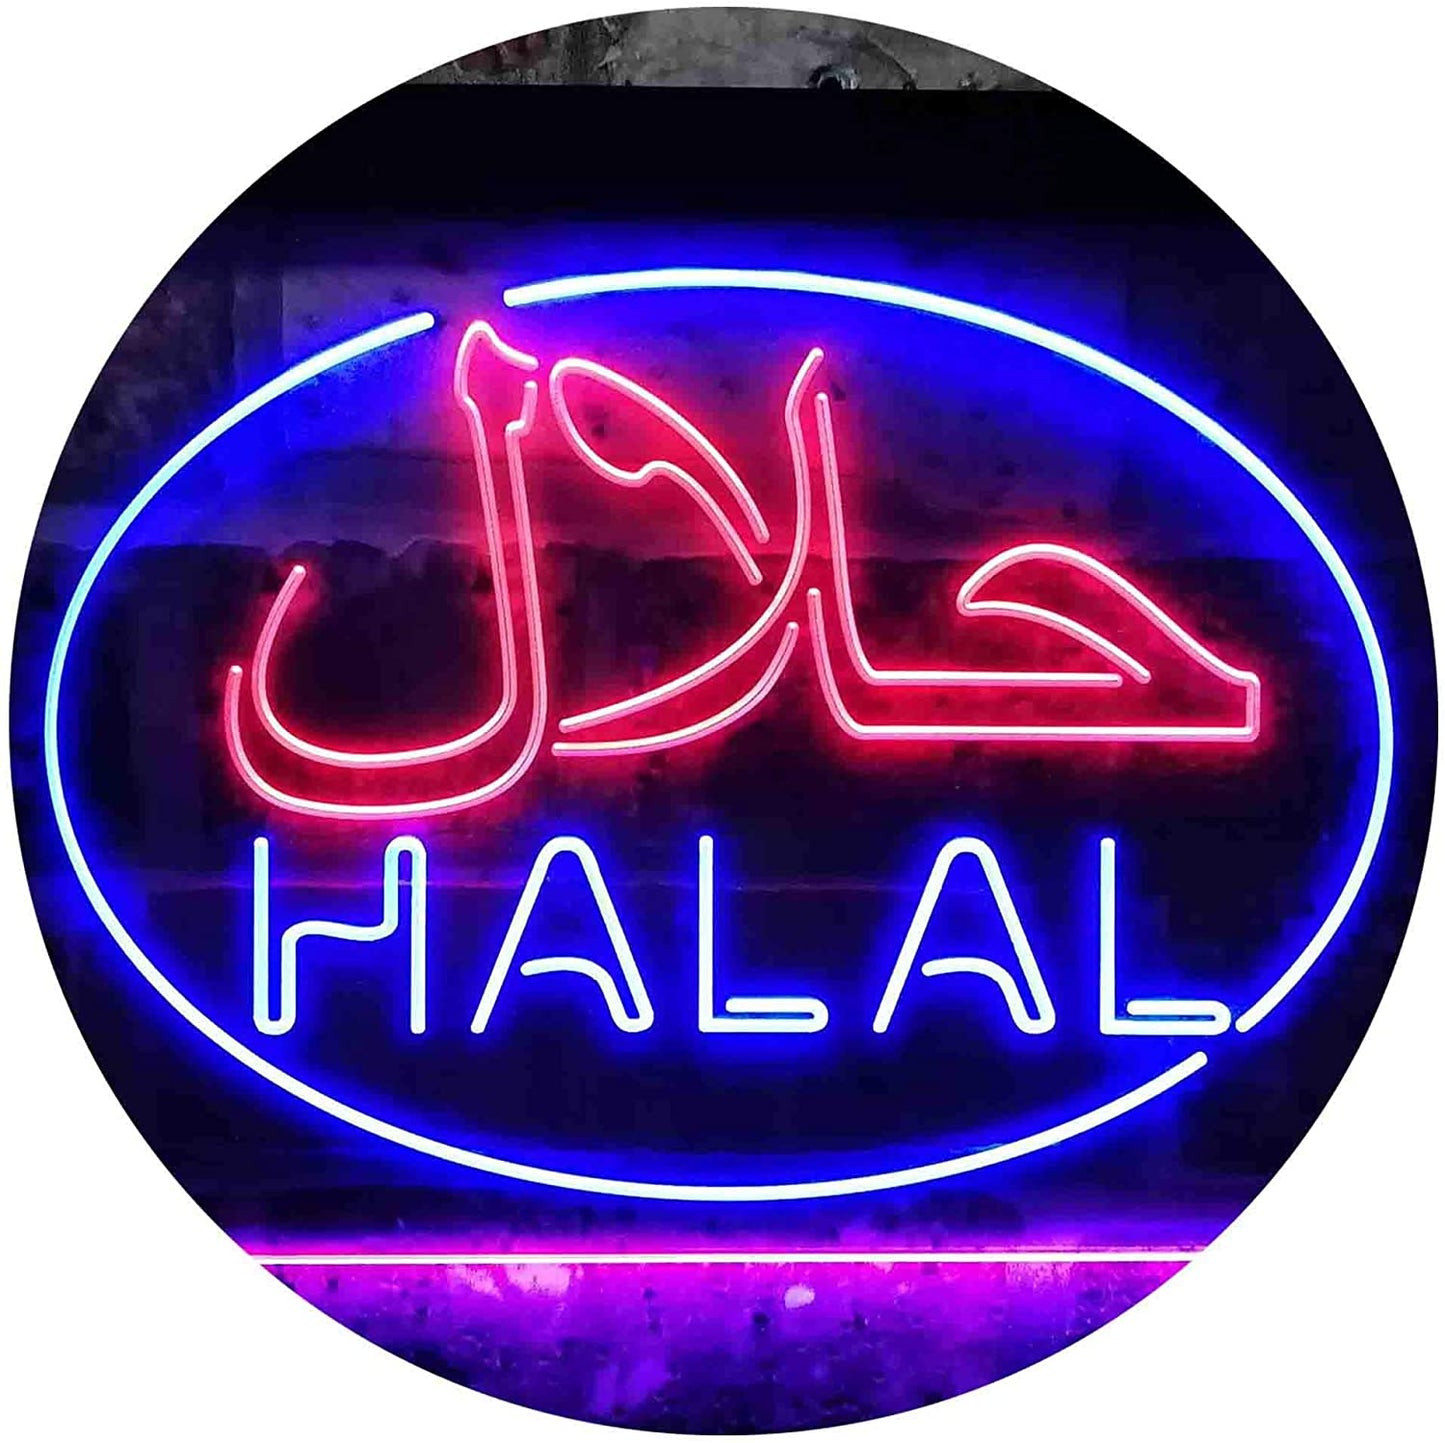 Arabic Restaurant Halal Food LED Neon Light Sign - Way Up Gifts